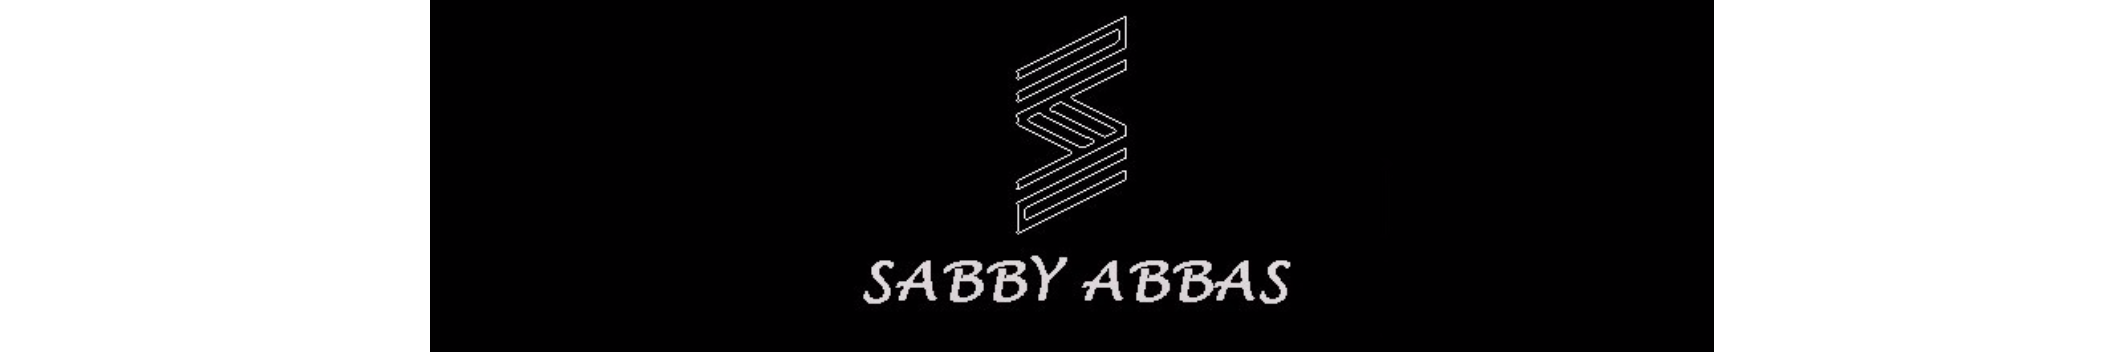 SabbyMusic